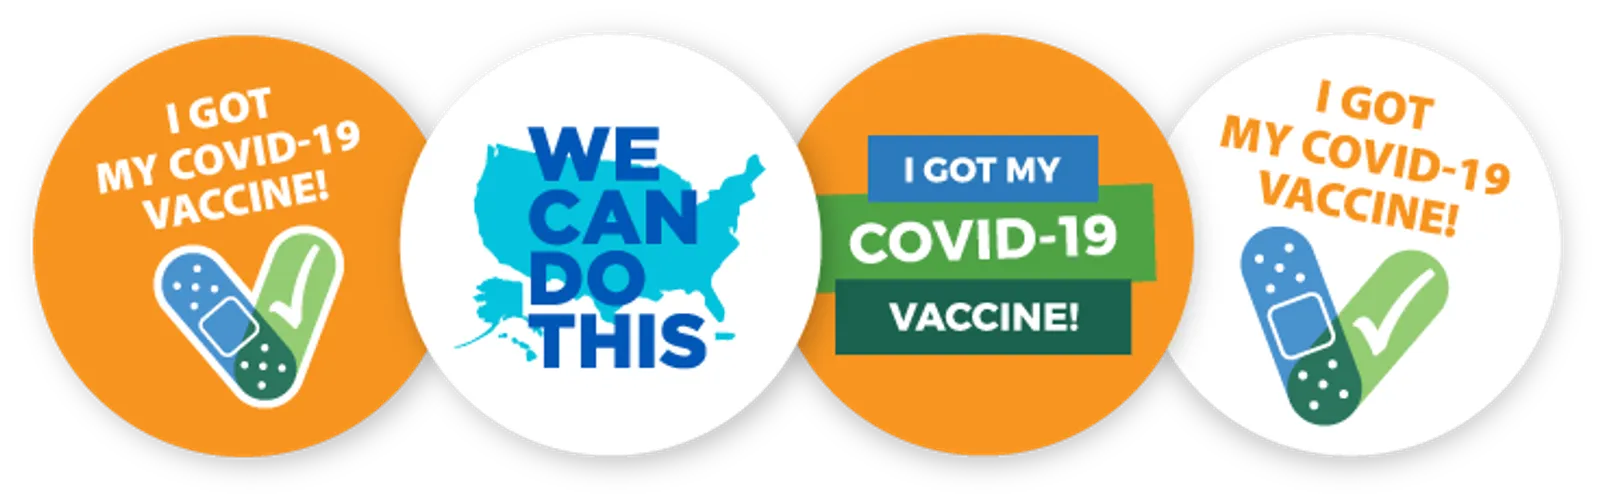 CDC Ungkap Tingkat Vaksinasi COVID-19 Pada Kaum LGBT Lebih Tinggi